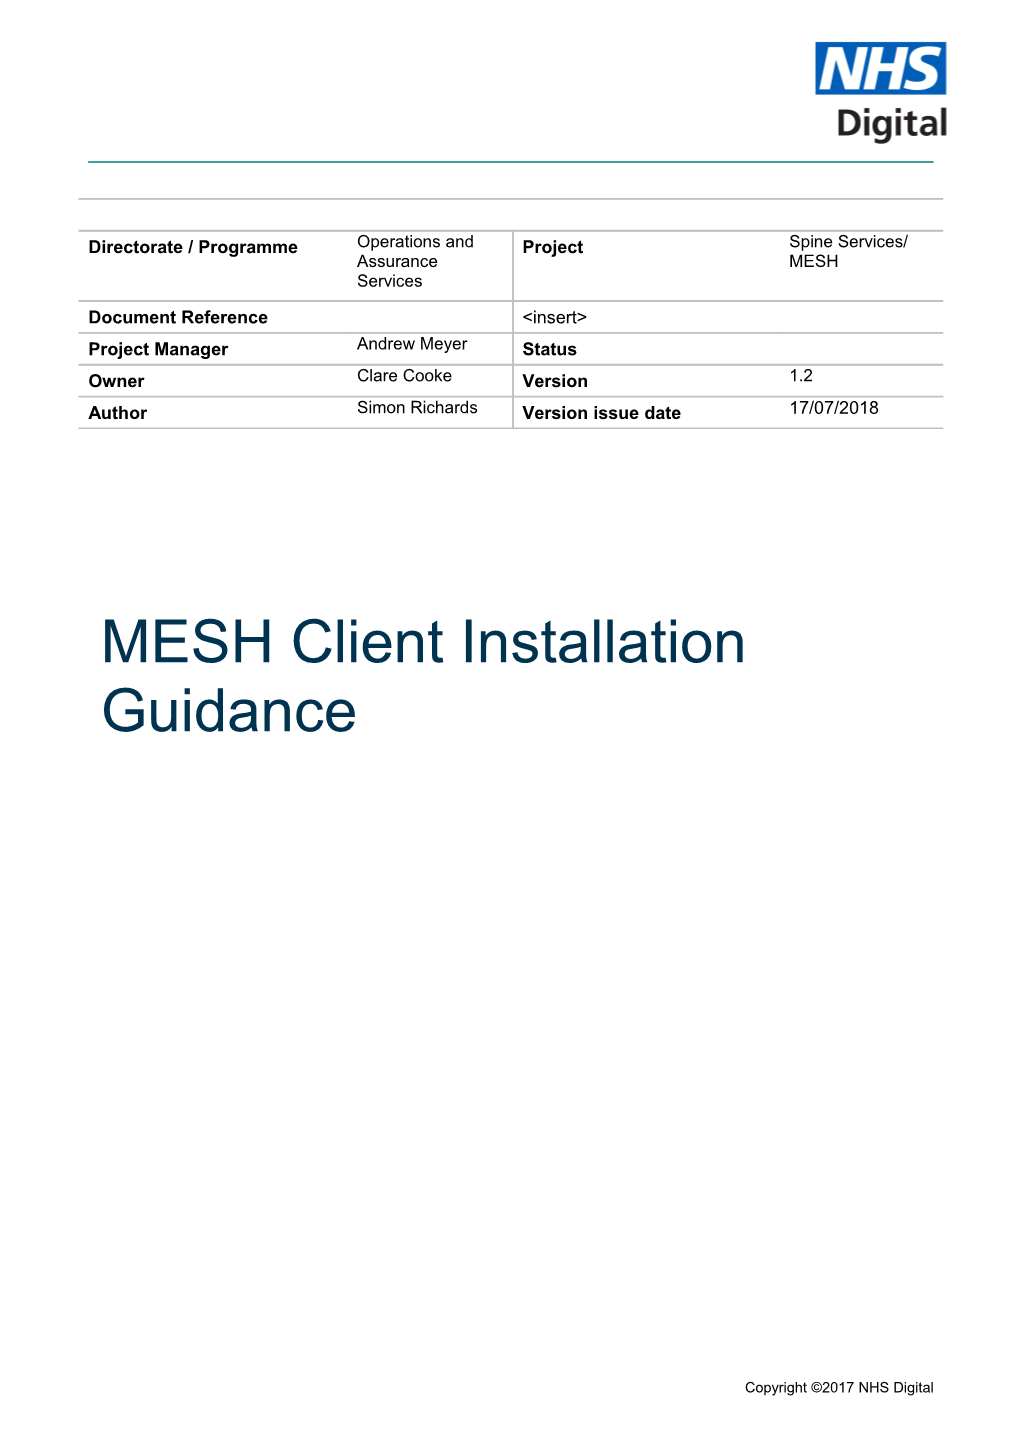 MESH Client Installation Guidance